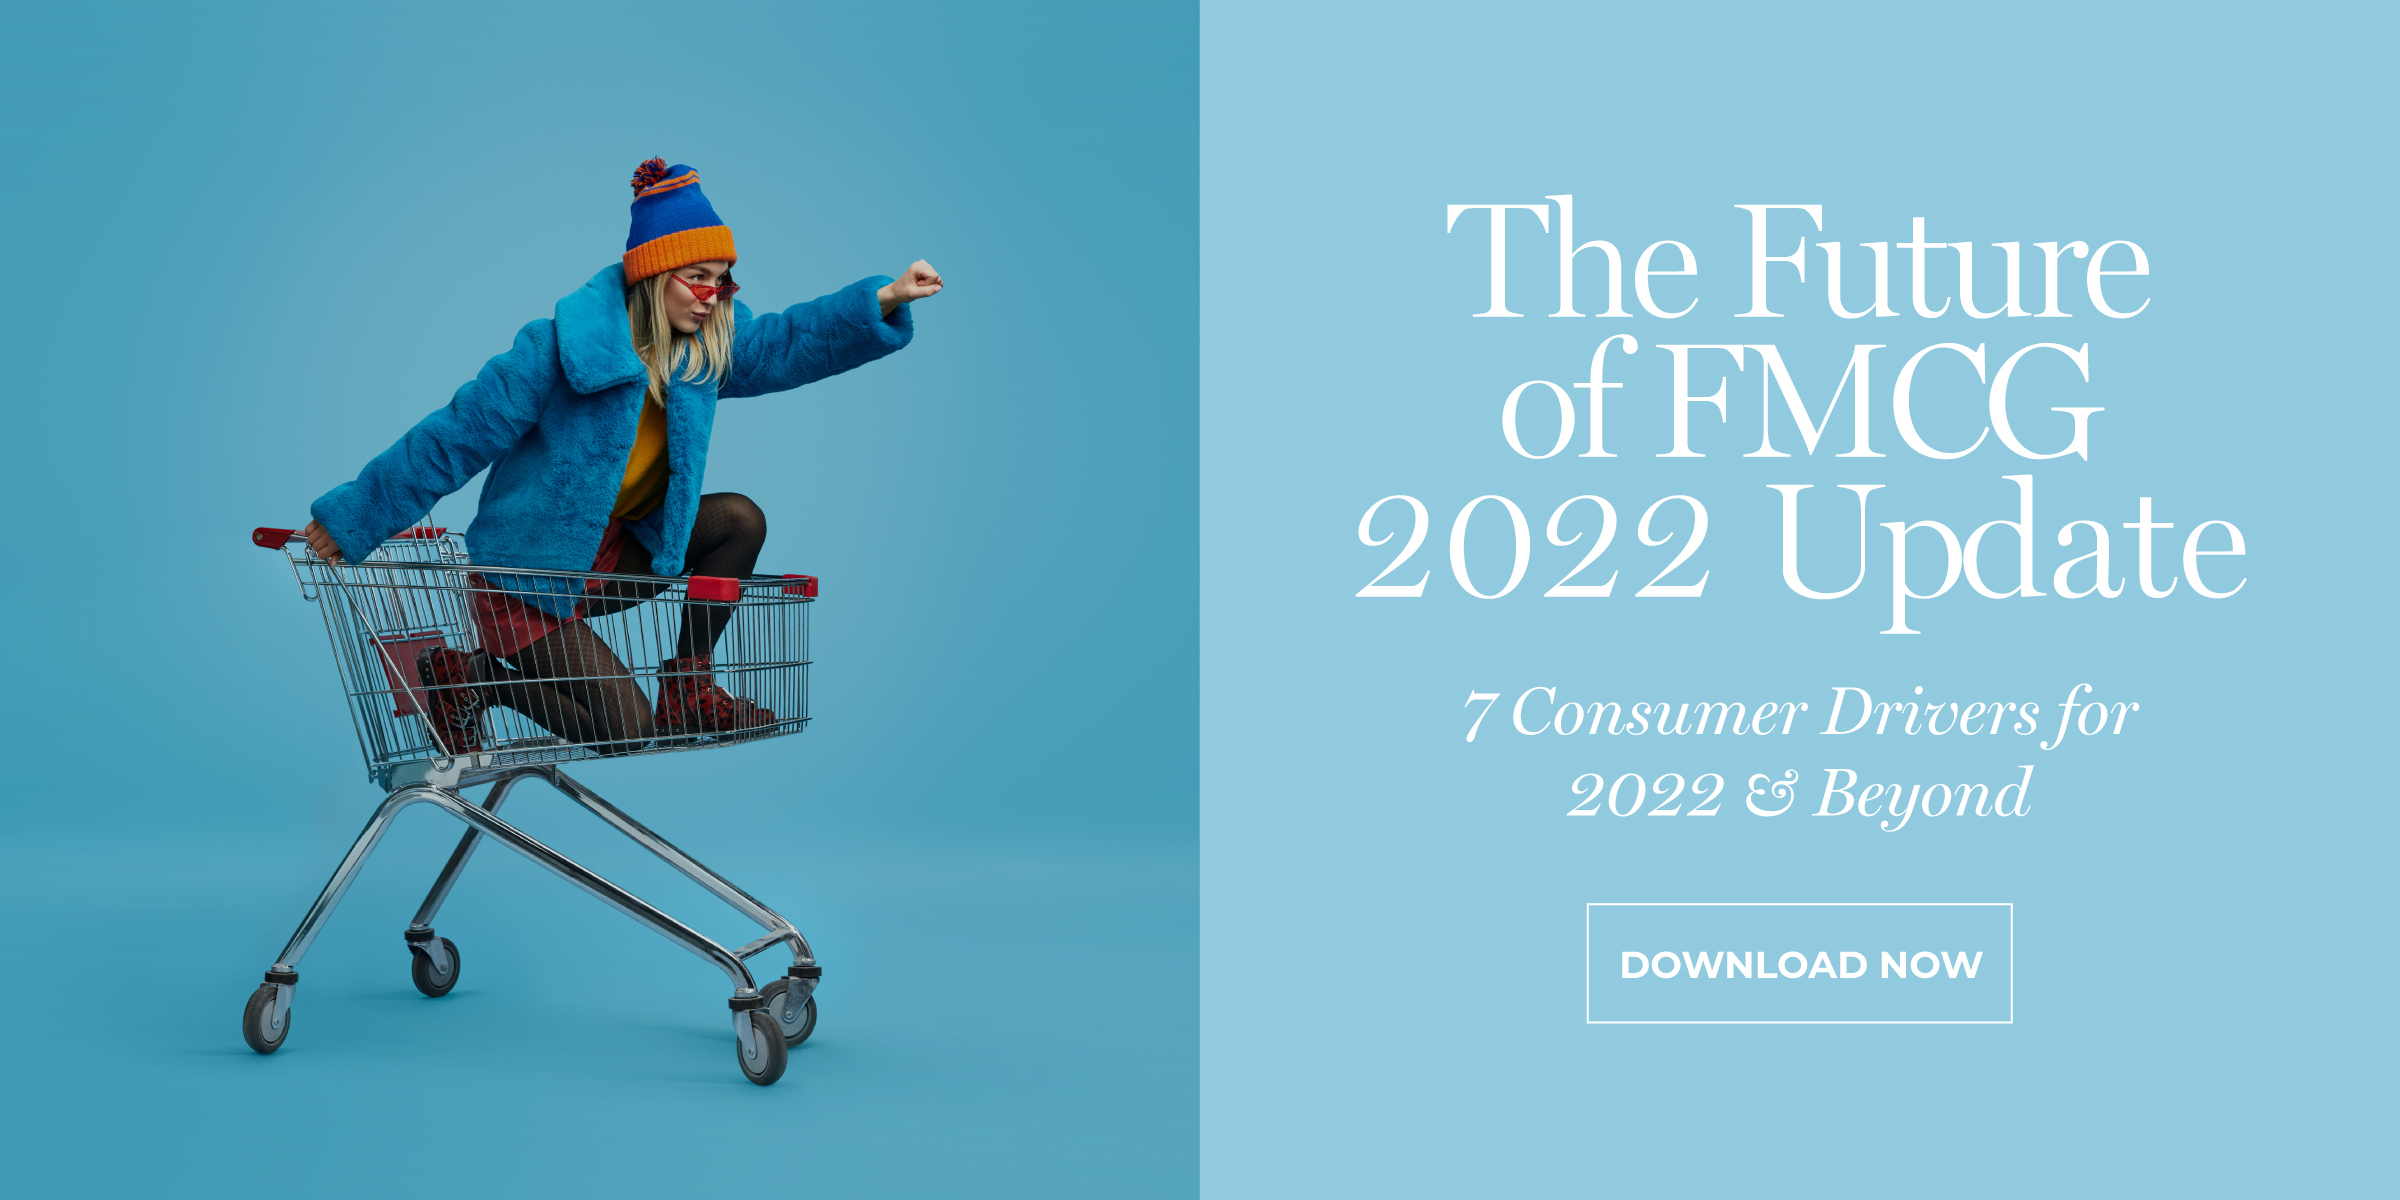 The Future of FMCG, consumer trends 2022